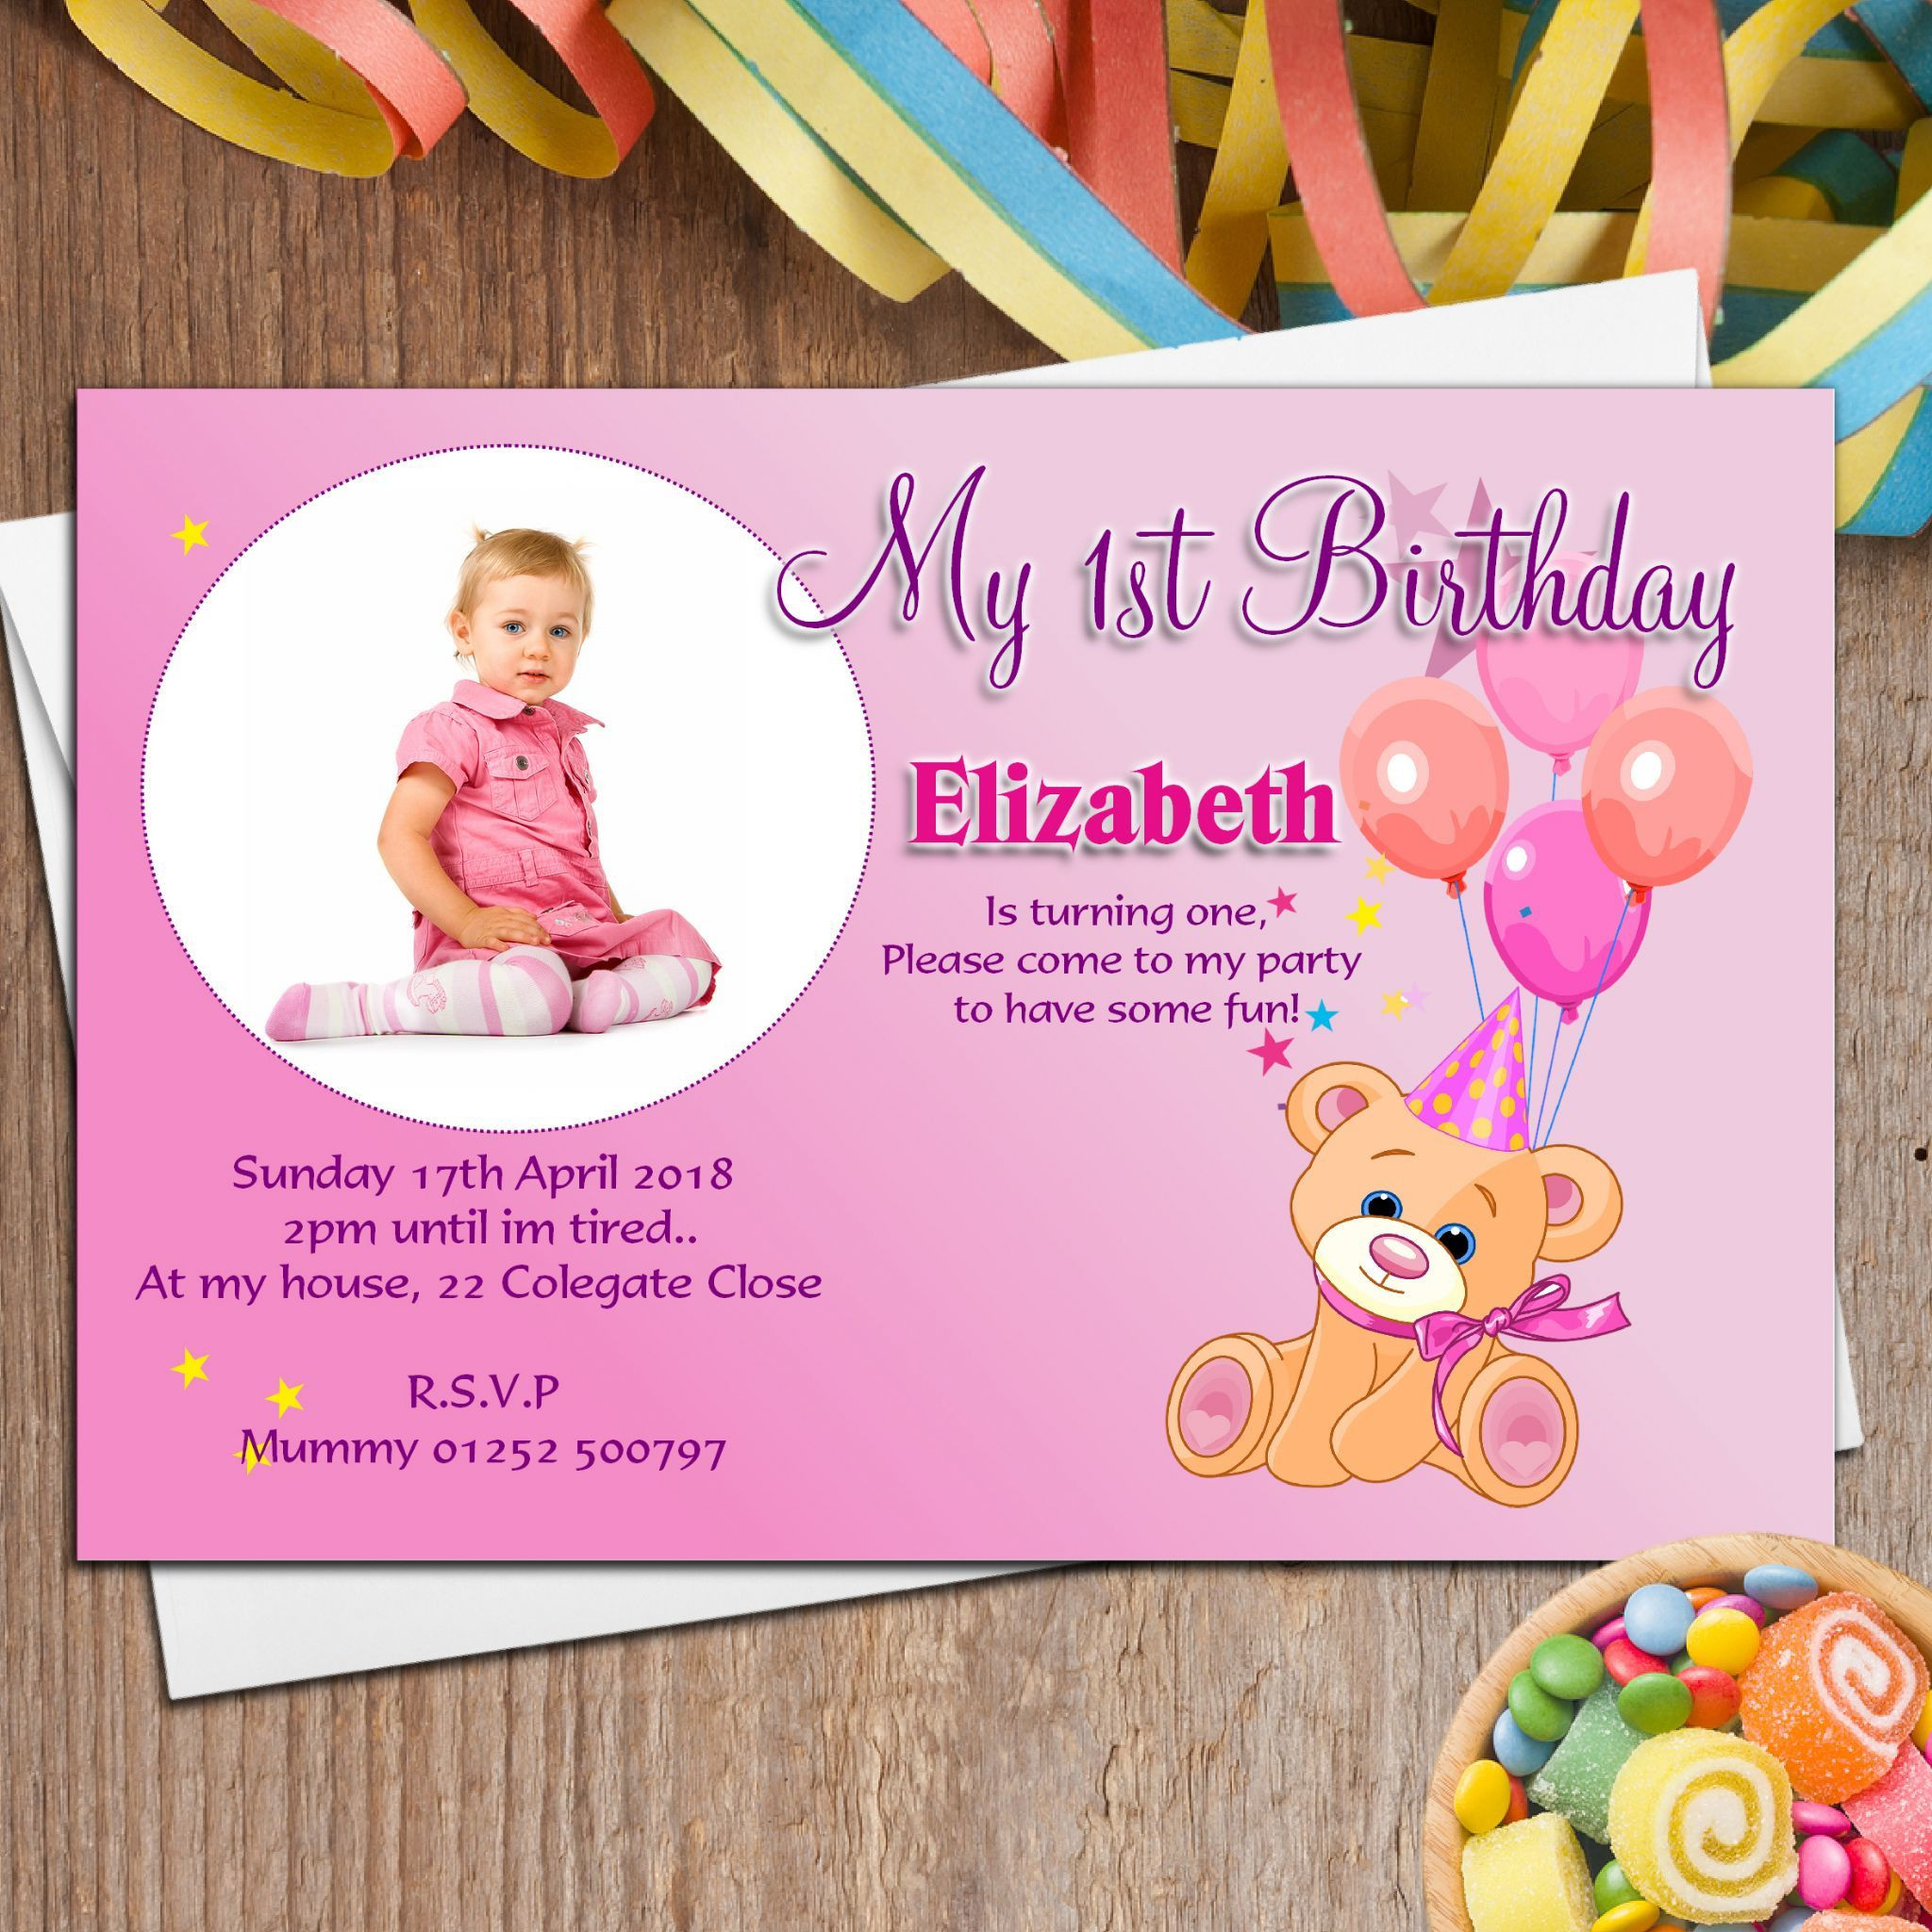 Birthday Card Invitation
 1st Birthday Invitation Cards For Baby Boy In India